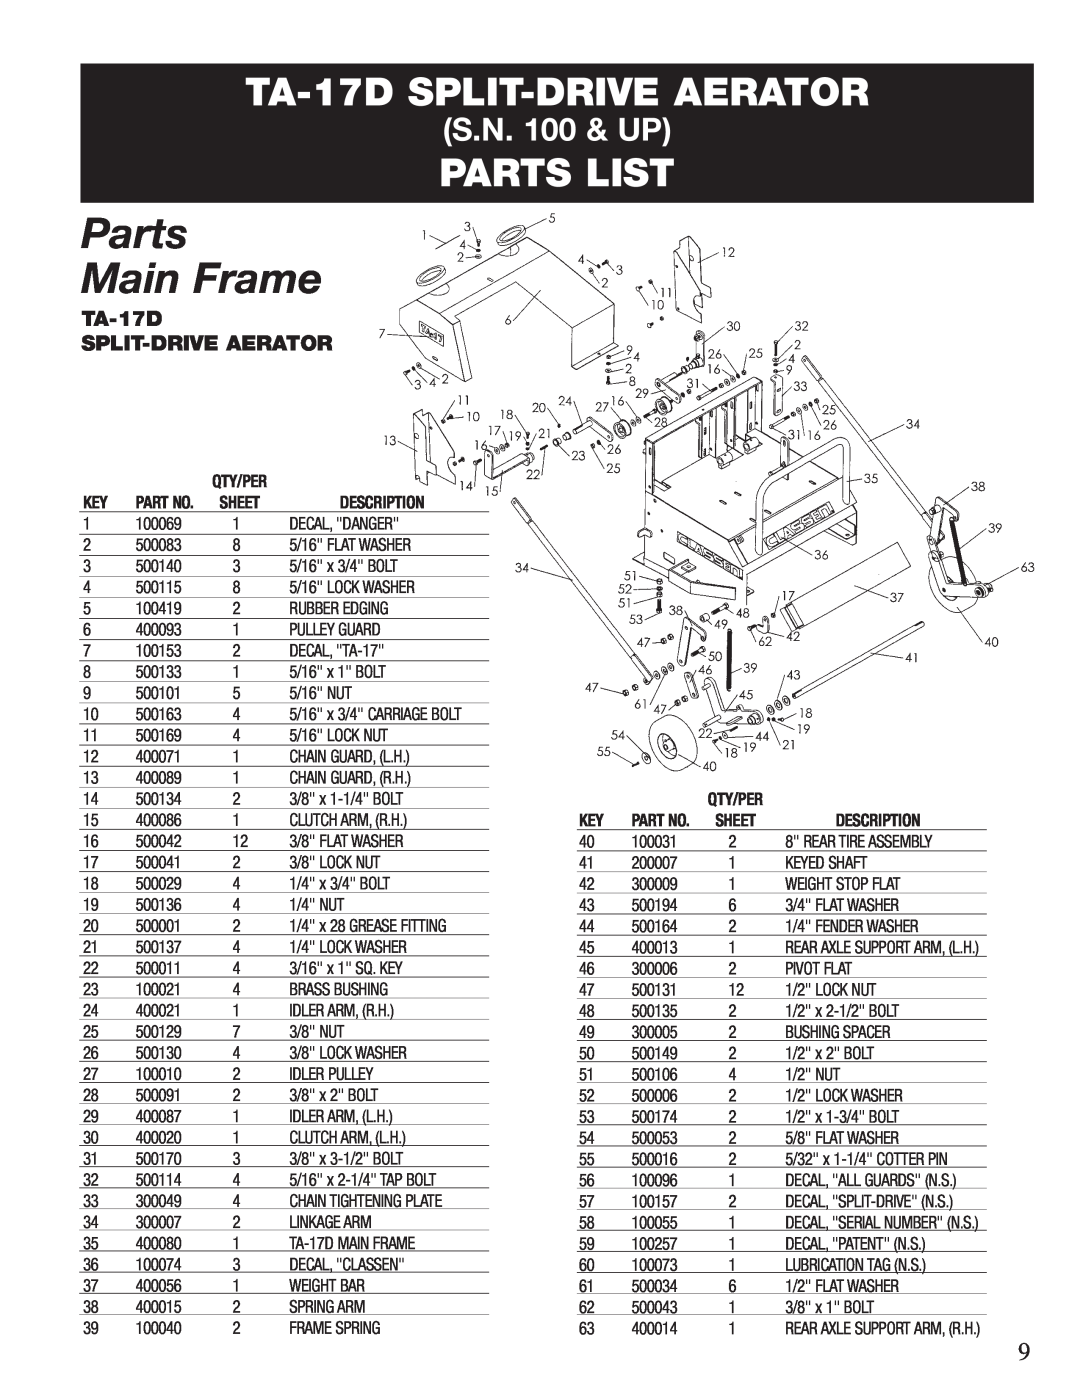 Classen TA-19D, 60-RT TA-17D SPLIT-DRIVE AERATOR, S.N. 100 & UP, Parts Main Frame, Parts List, Qty/Per, Sheet, Description 